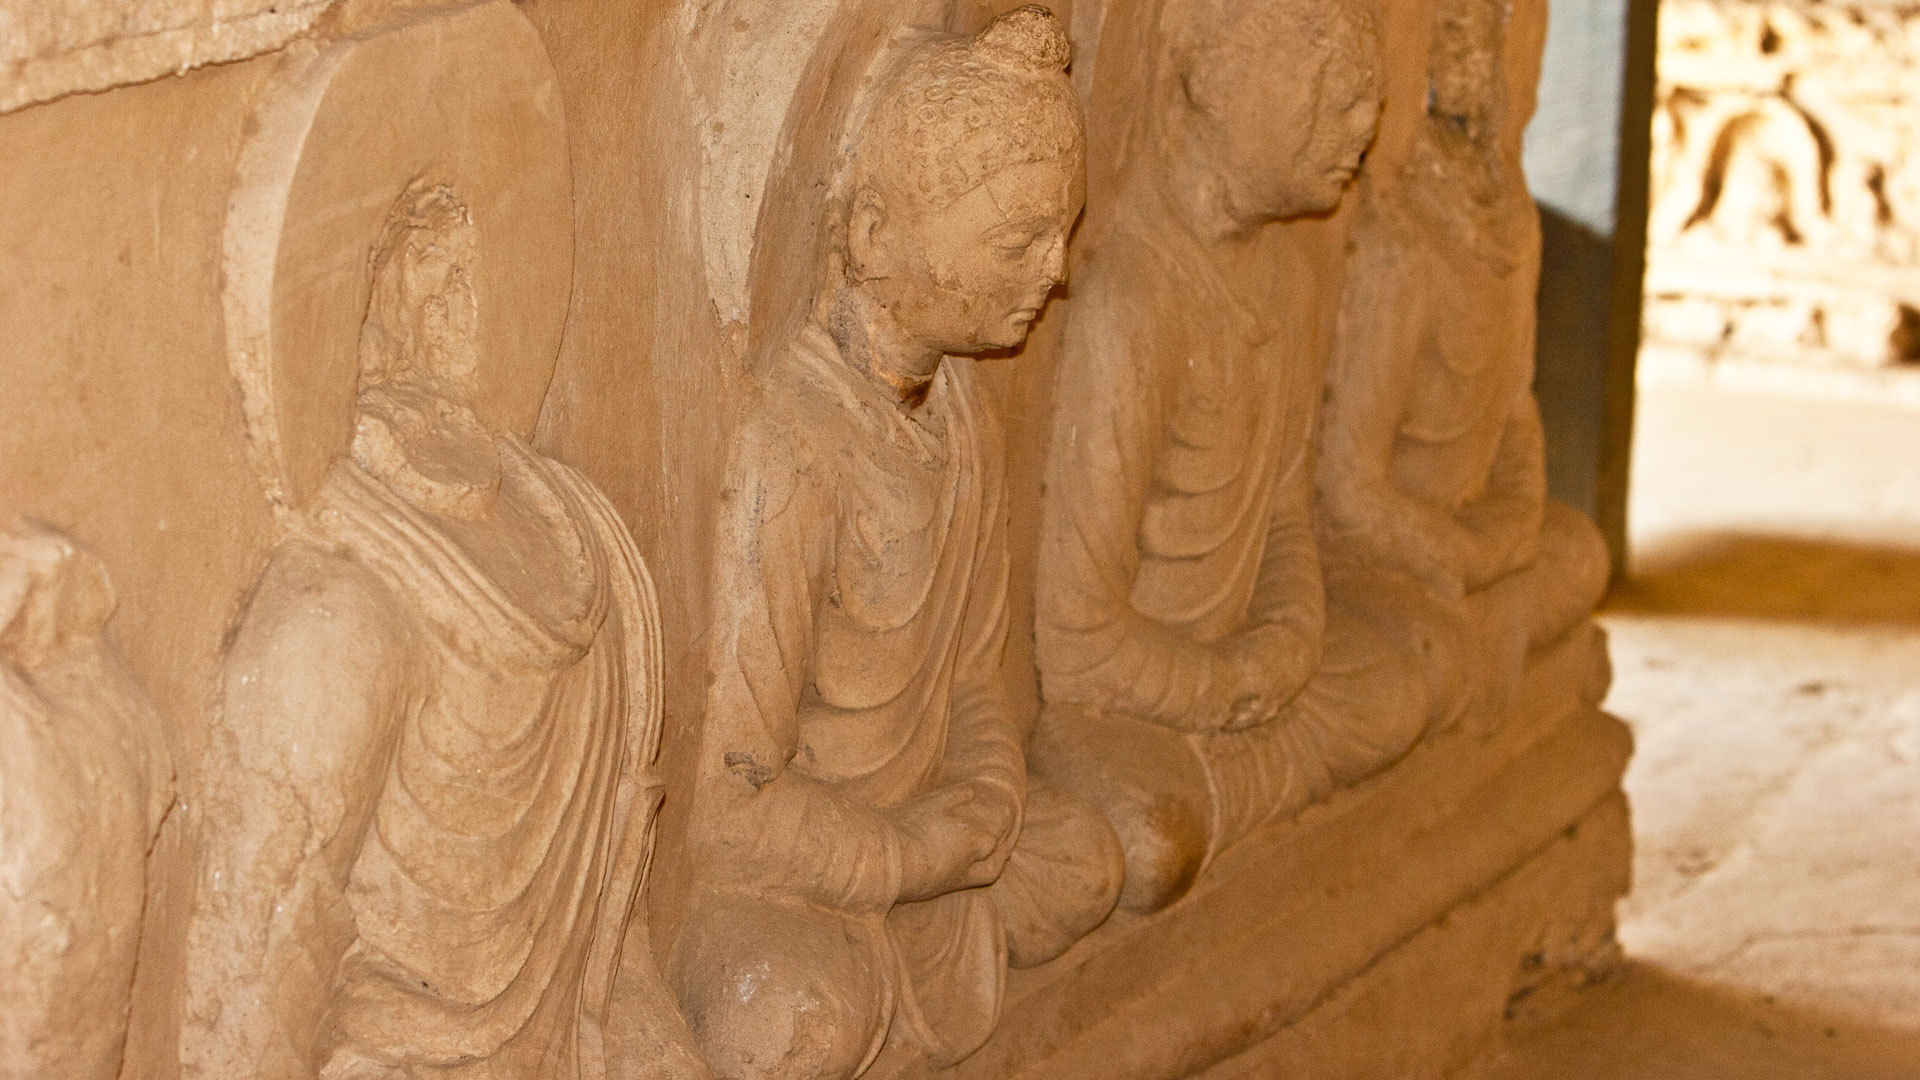 Seated Buddhas in a votive stupa in the lower stupa court of Jaulian, Taxila, Punjab, Pakistan